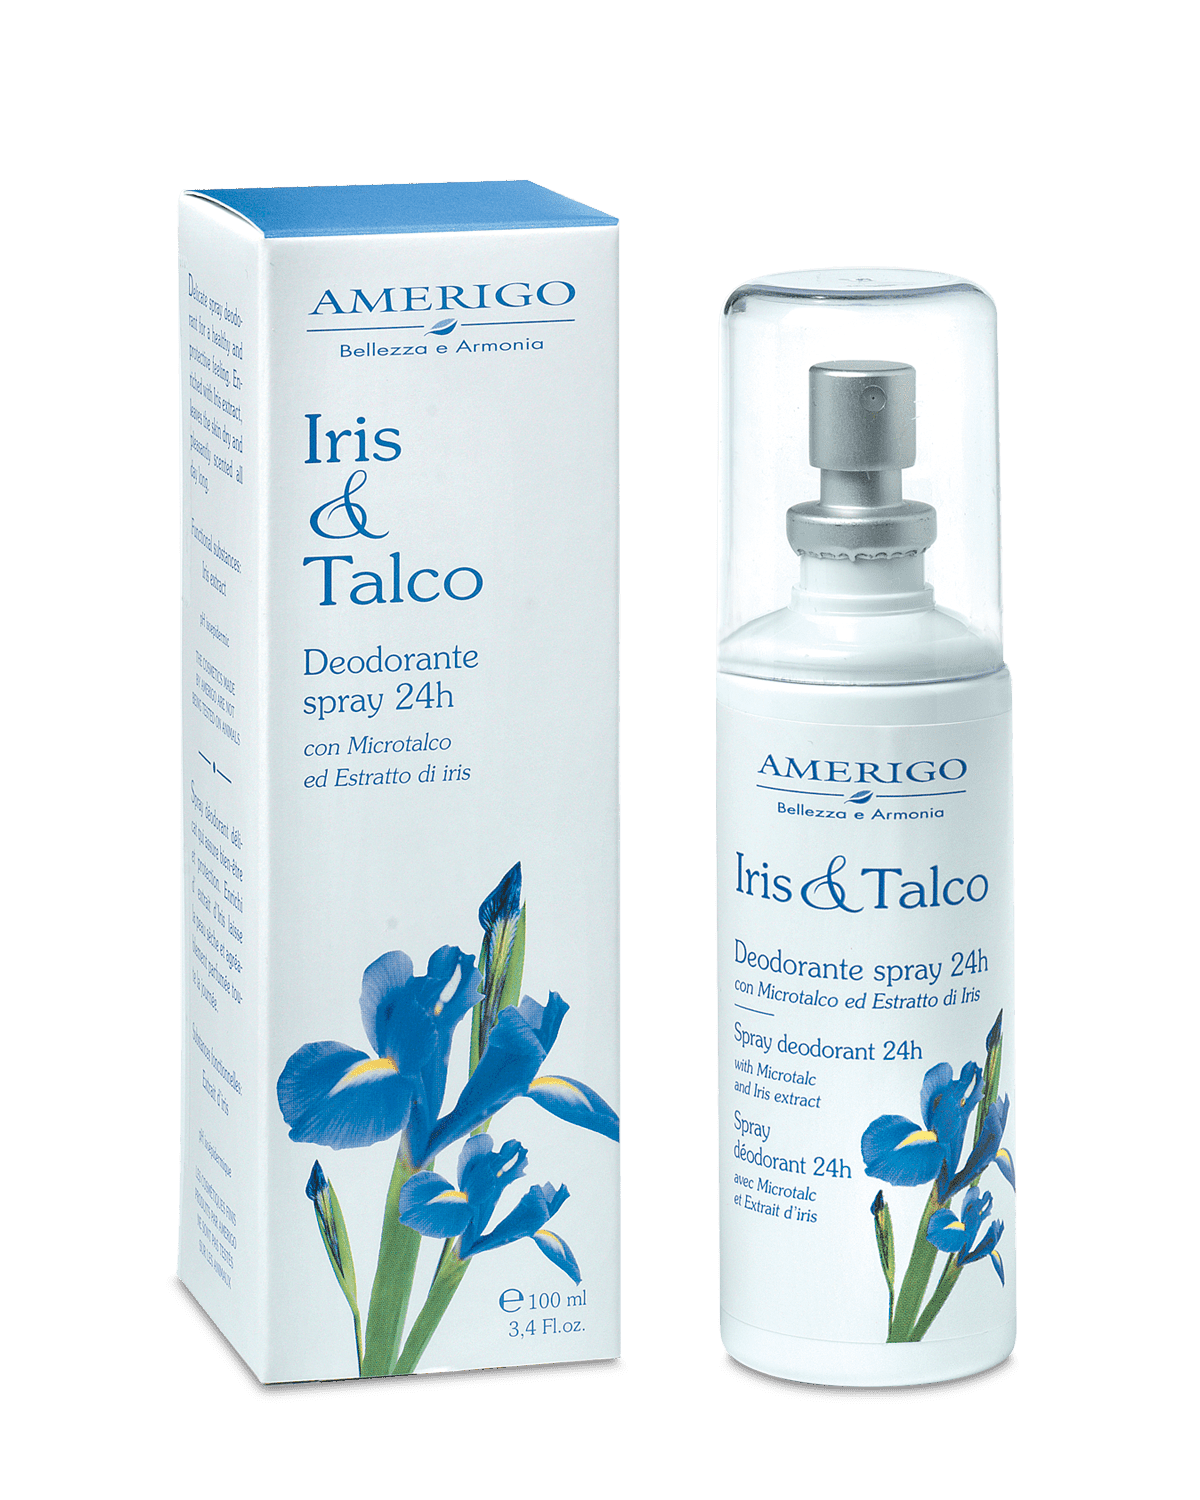 Iris &Talco profumi  naturali Amerigo Made in italy